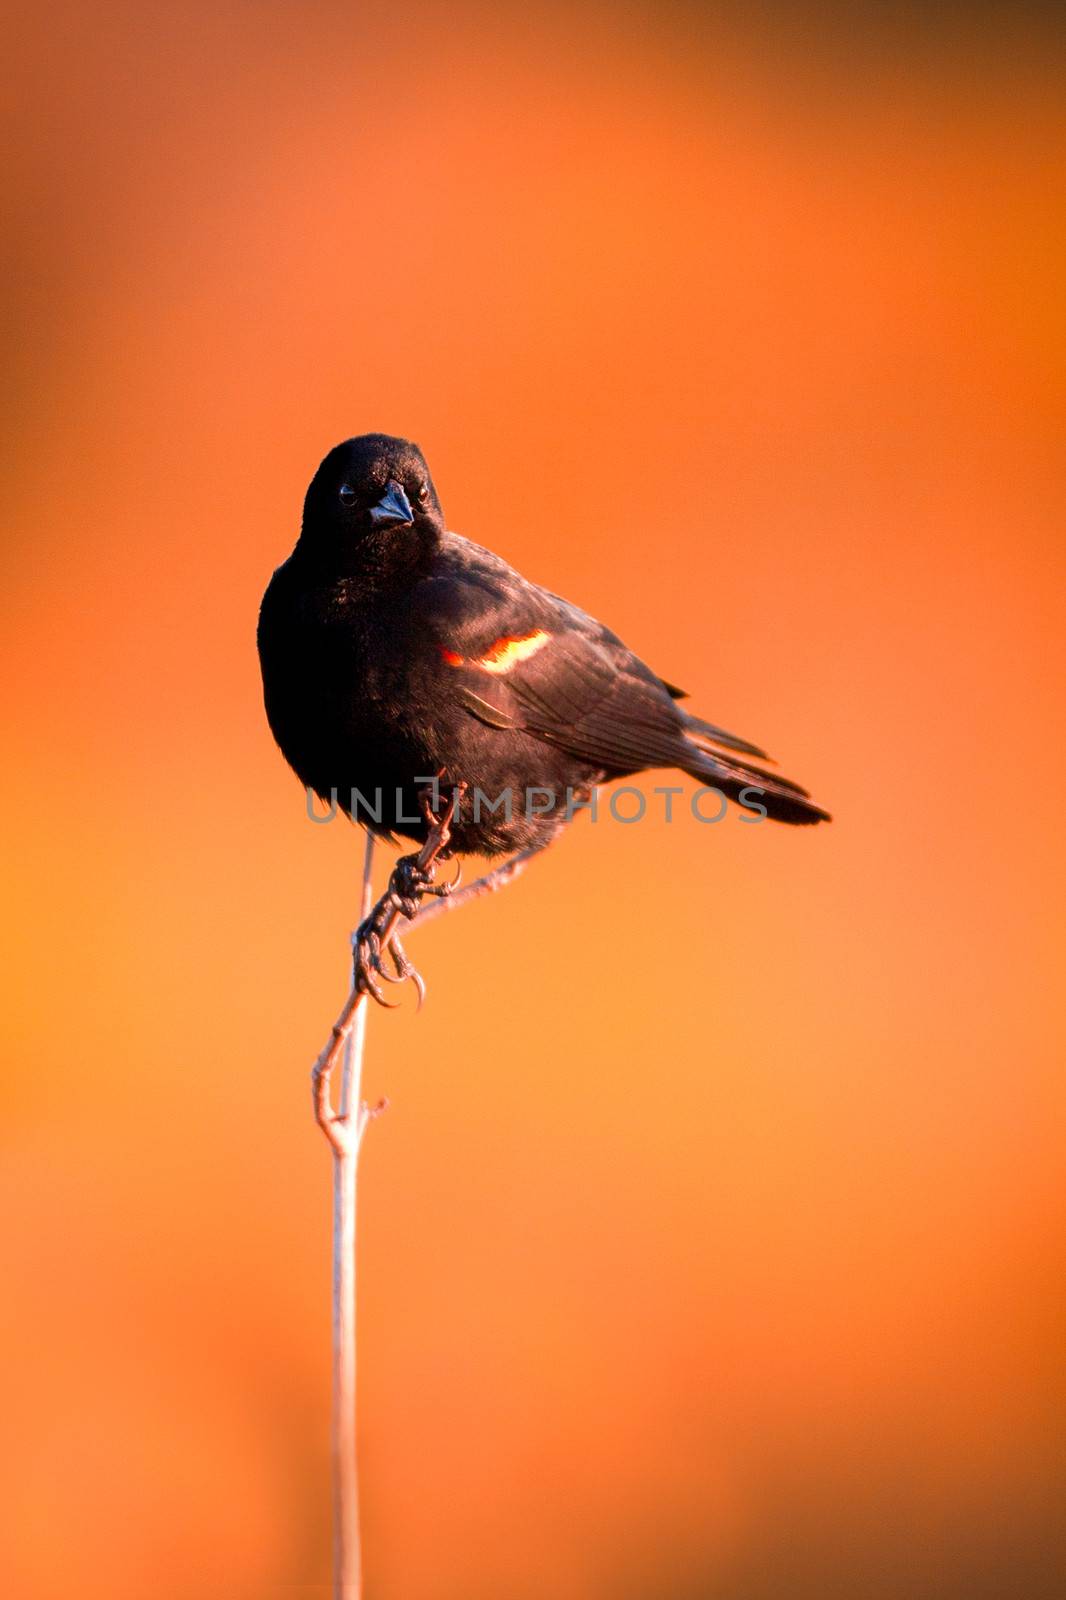 Blackbird on plant by CelsoDiniz